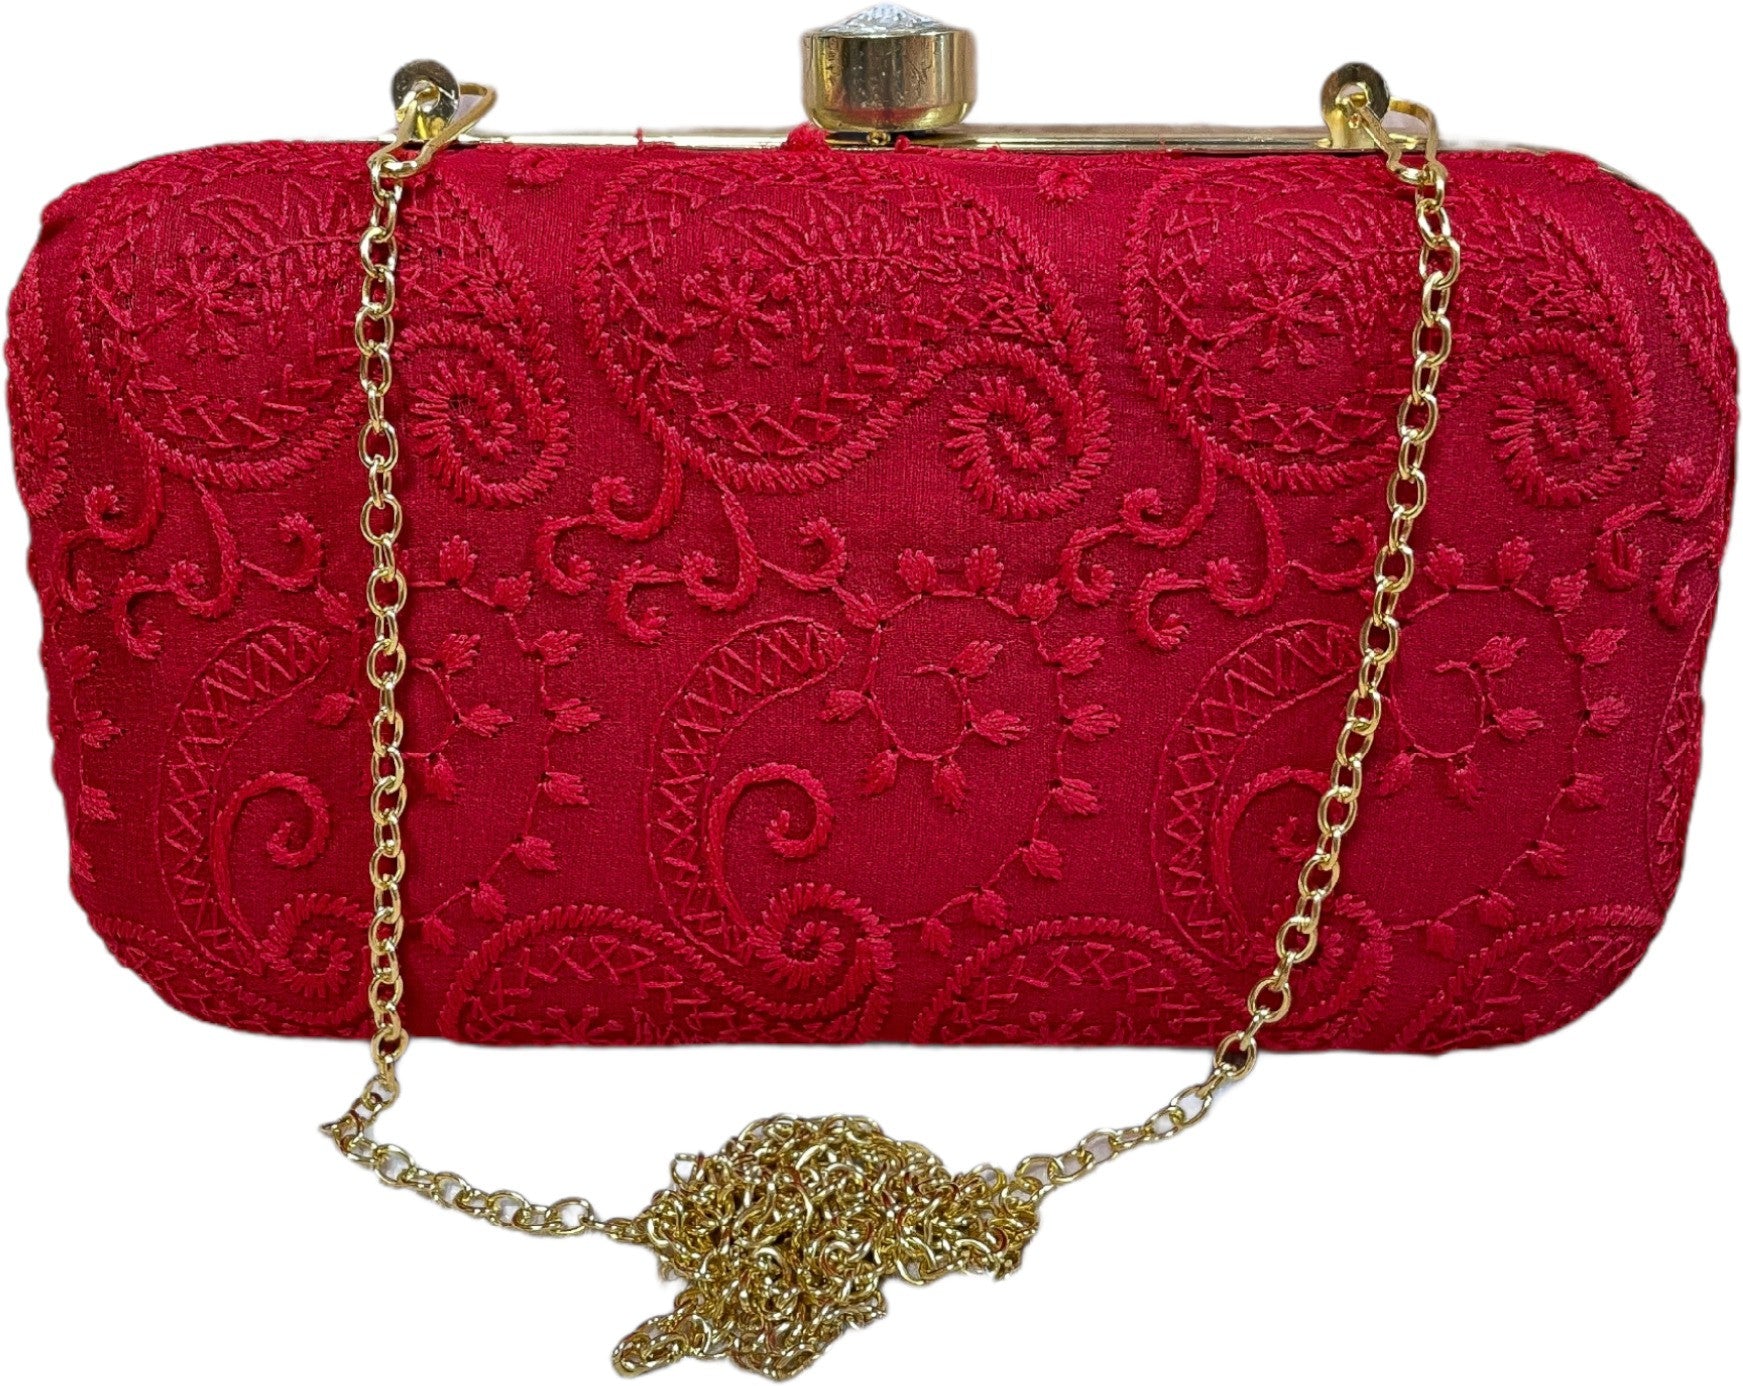 LONGING TO BUY Indian Ethnic Women Potli Bags For Wedding & Party Function  (Maroon): Handbags: Amazon.com